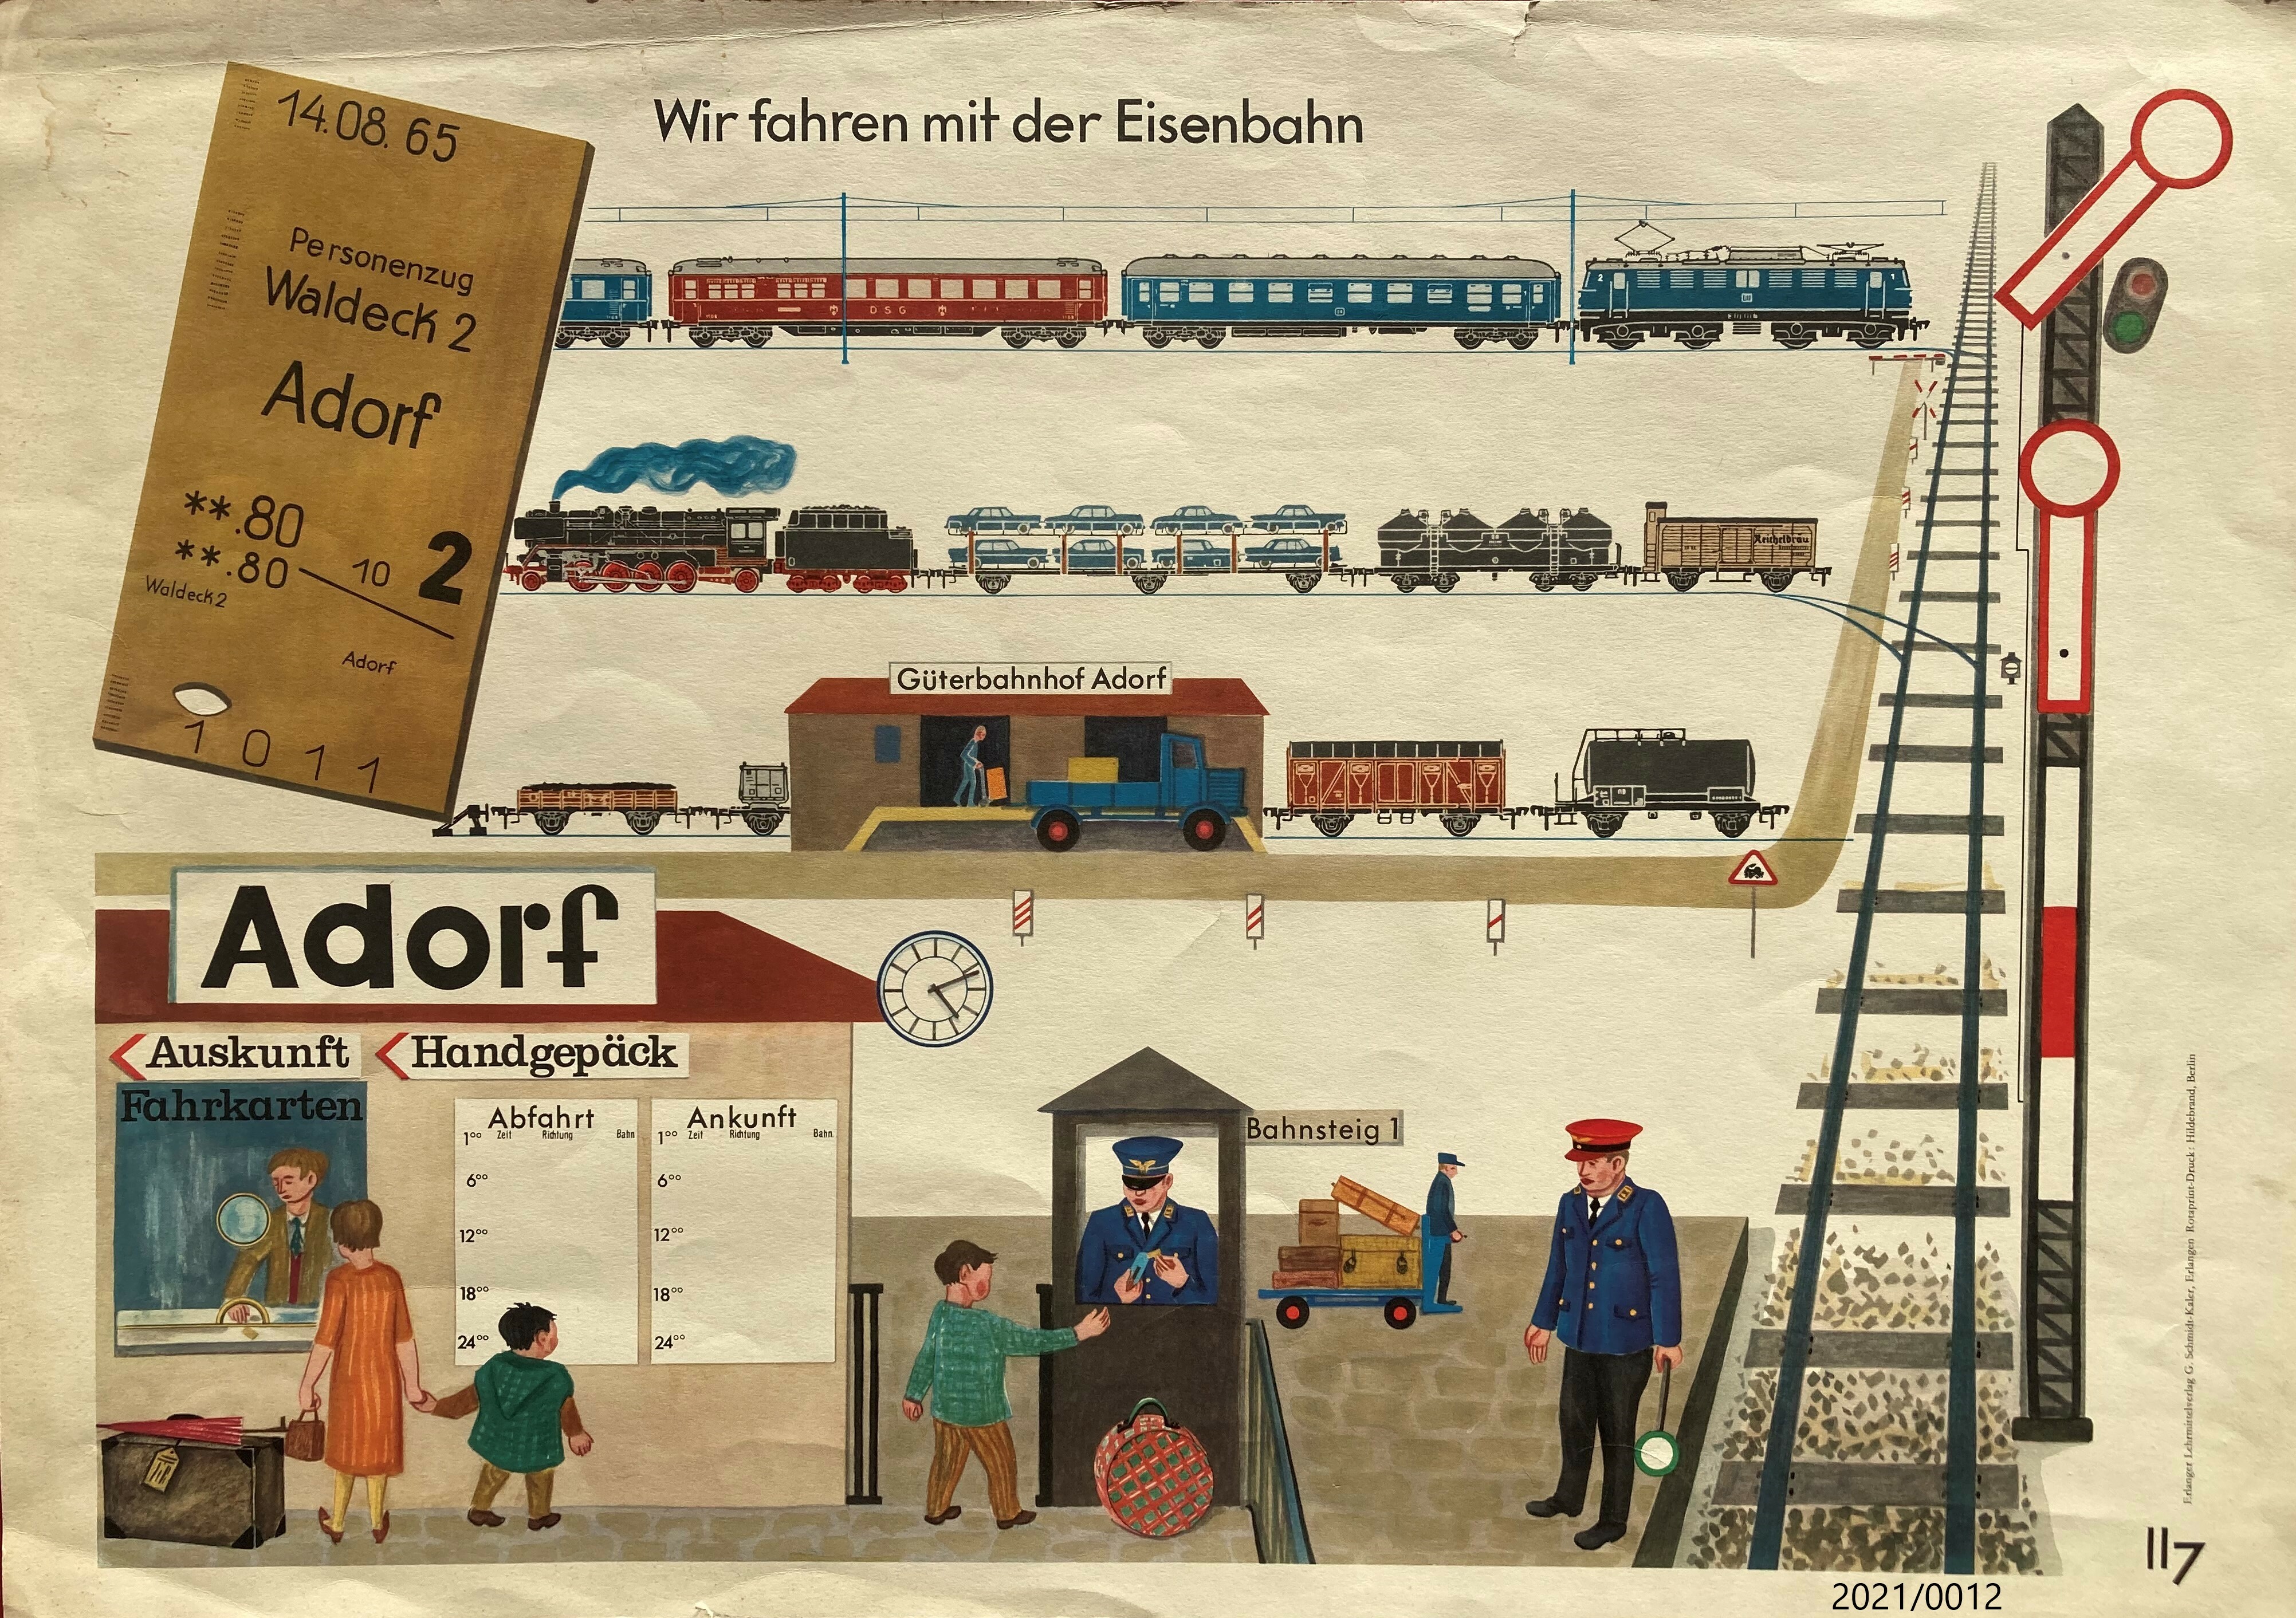 Anschauungsbild zum Eisenbahnverkehr (Stadtmuseum Bad Dürkheim im Kulturzentrum Haus Catoir CC BY-NC-SA)